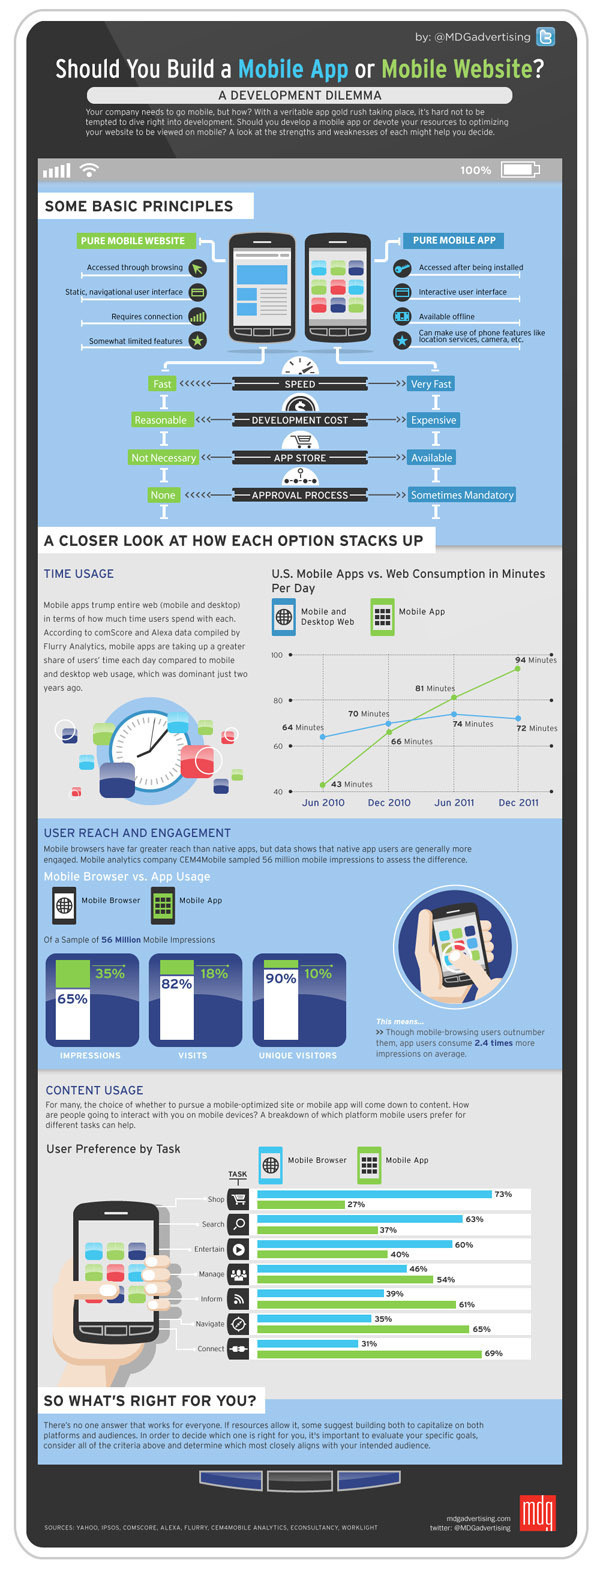 Infographic design idea #146: Should You Build a Mobile App or Mobile Website? [Infographic] #infographic